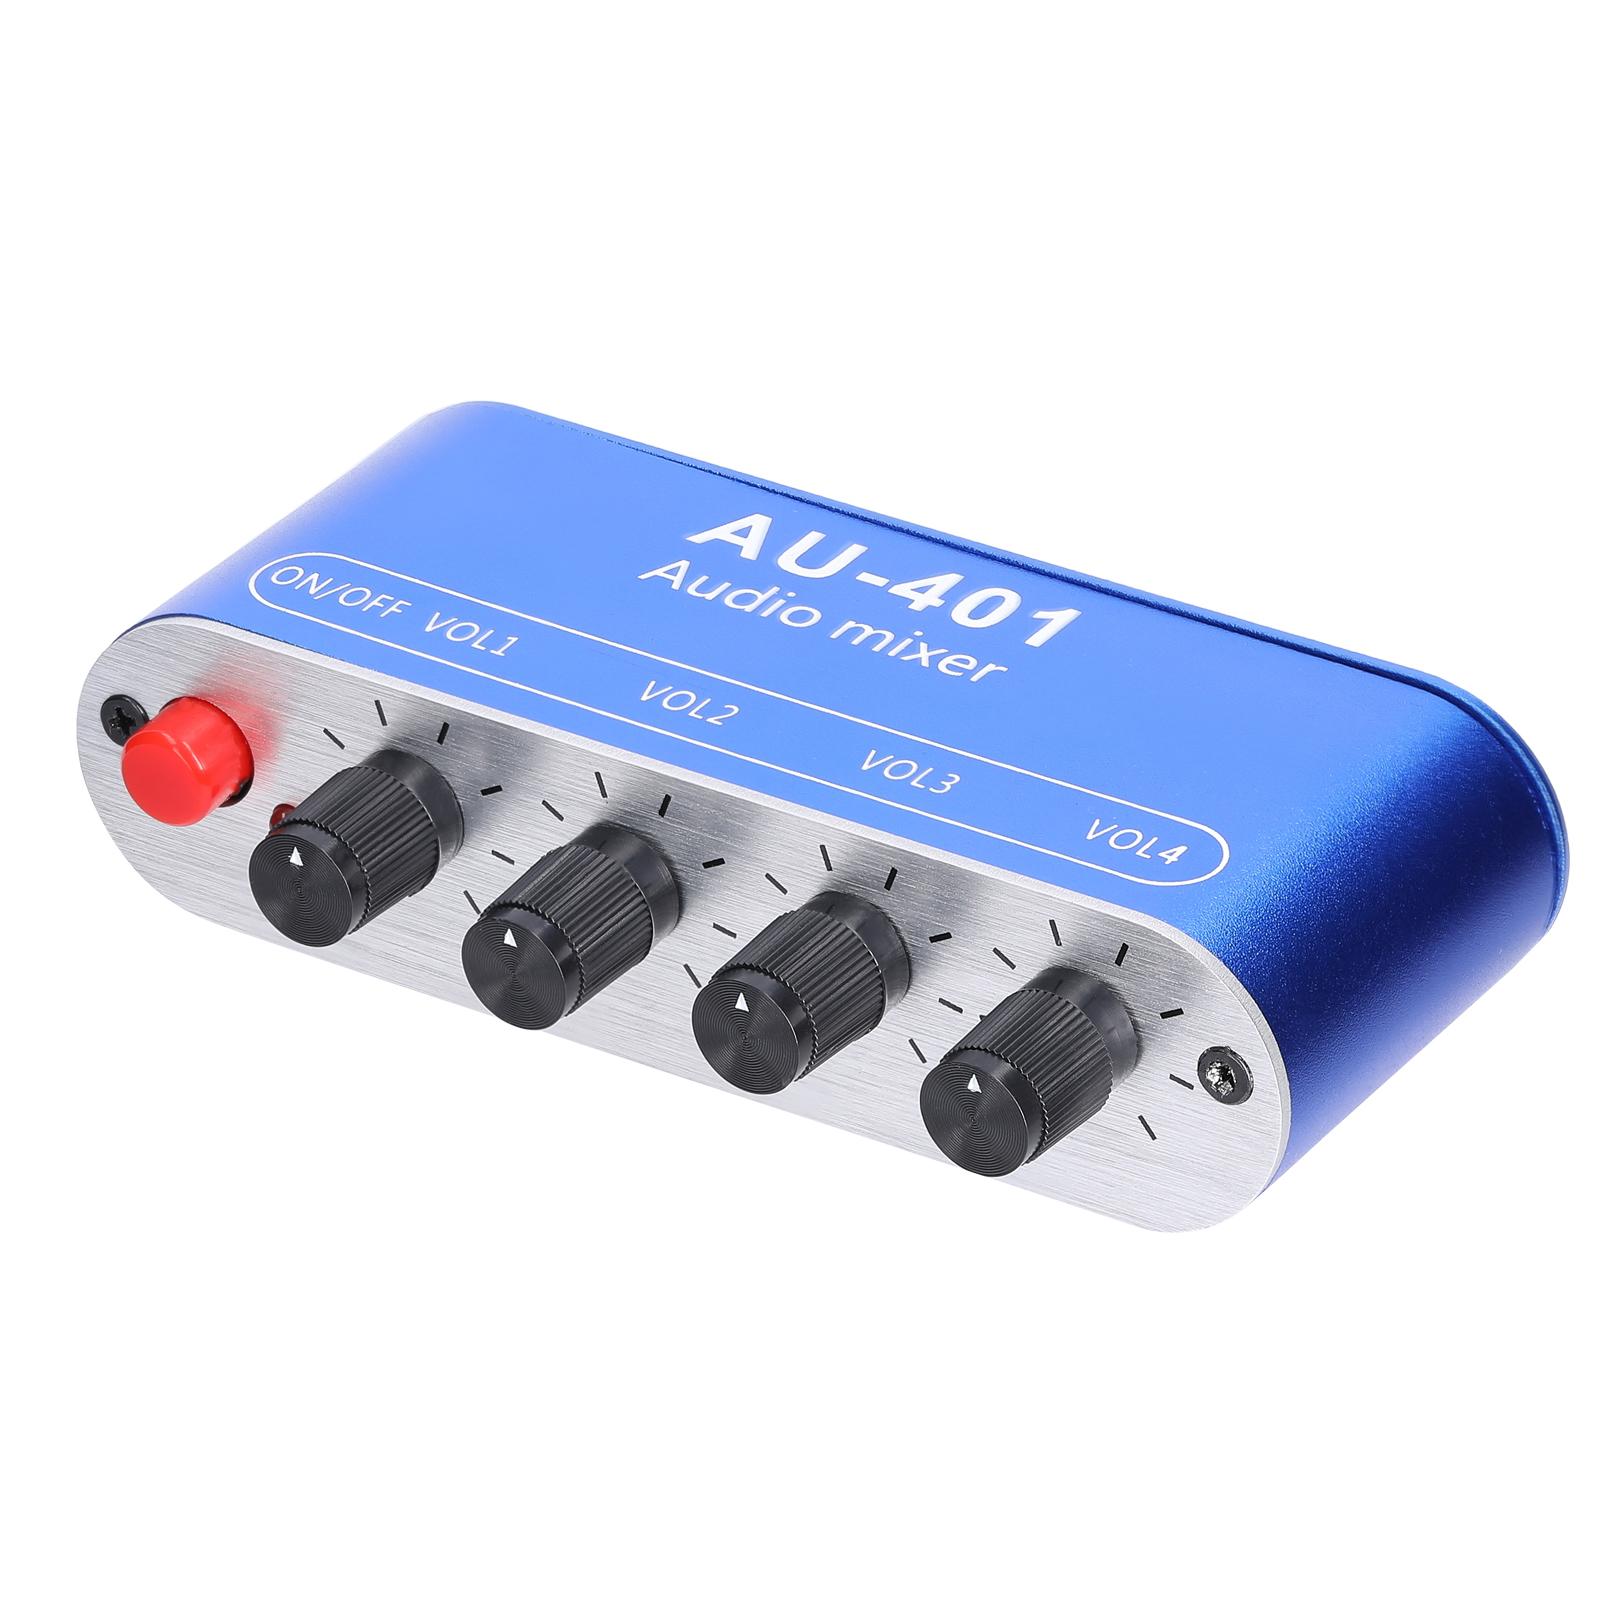 3.5mm Audio Mixer Stereo Audio Mixer 4 Input to 1 Output Individually Controls Sound Mixing Tool Headphones Amplifier